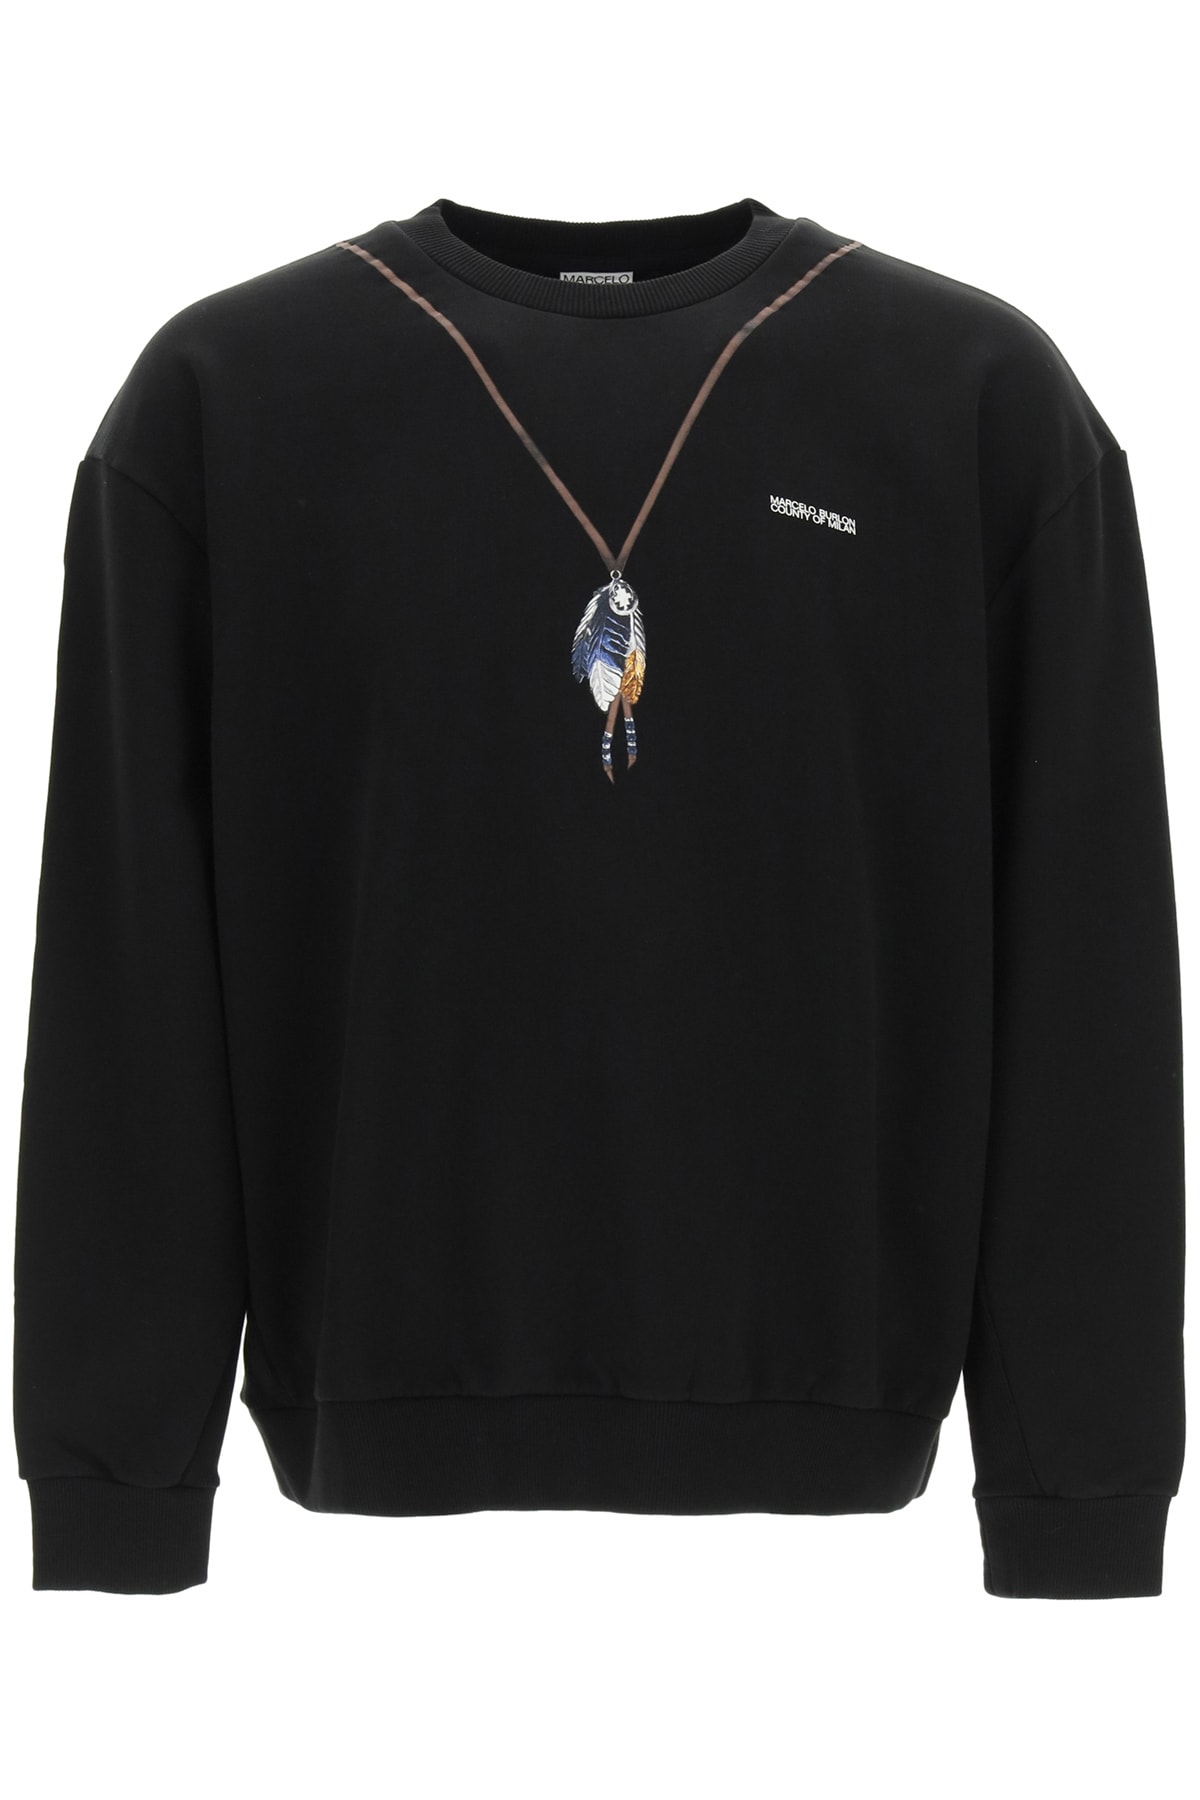 Marcelo Burlon Crewneck Sweatshirt With Single Chain Feathers Print